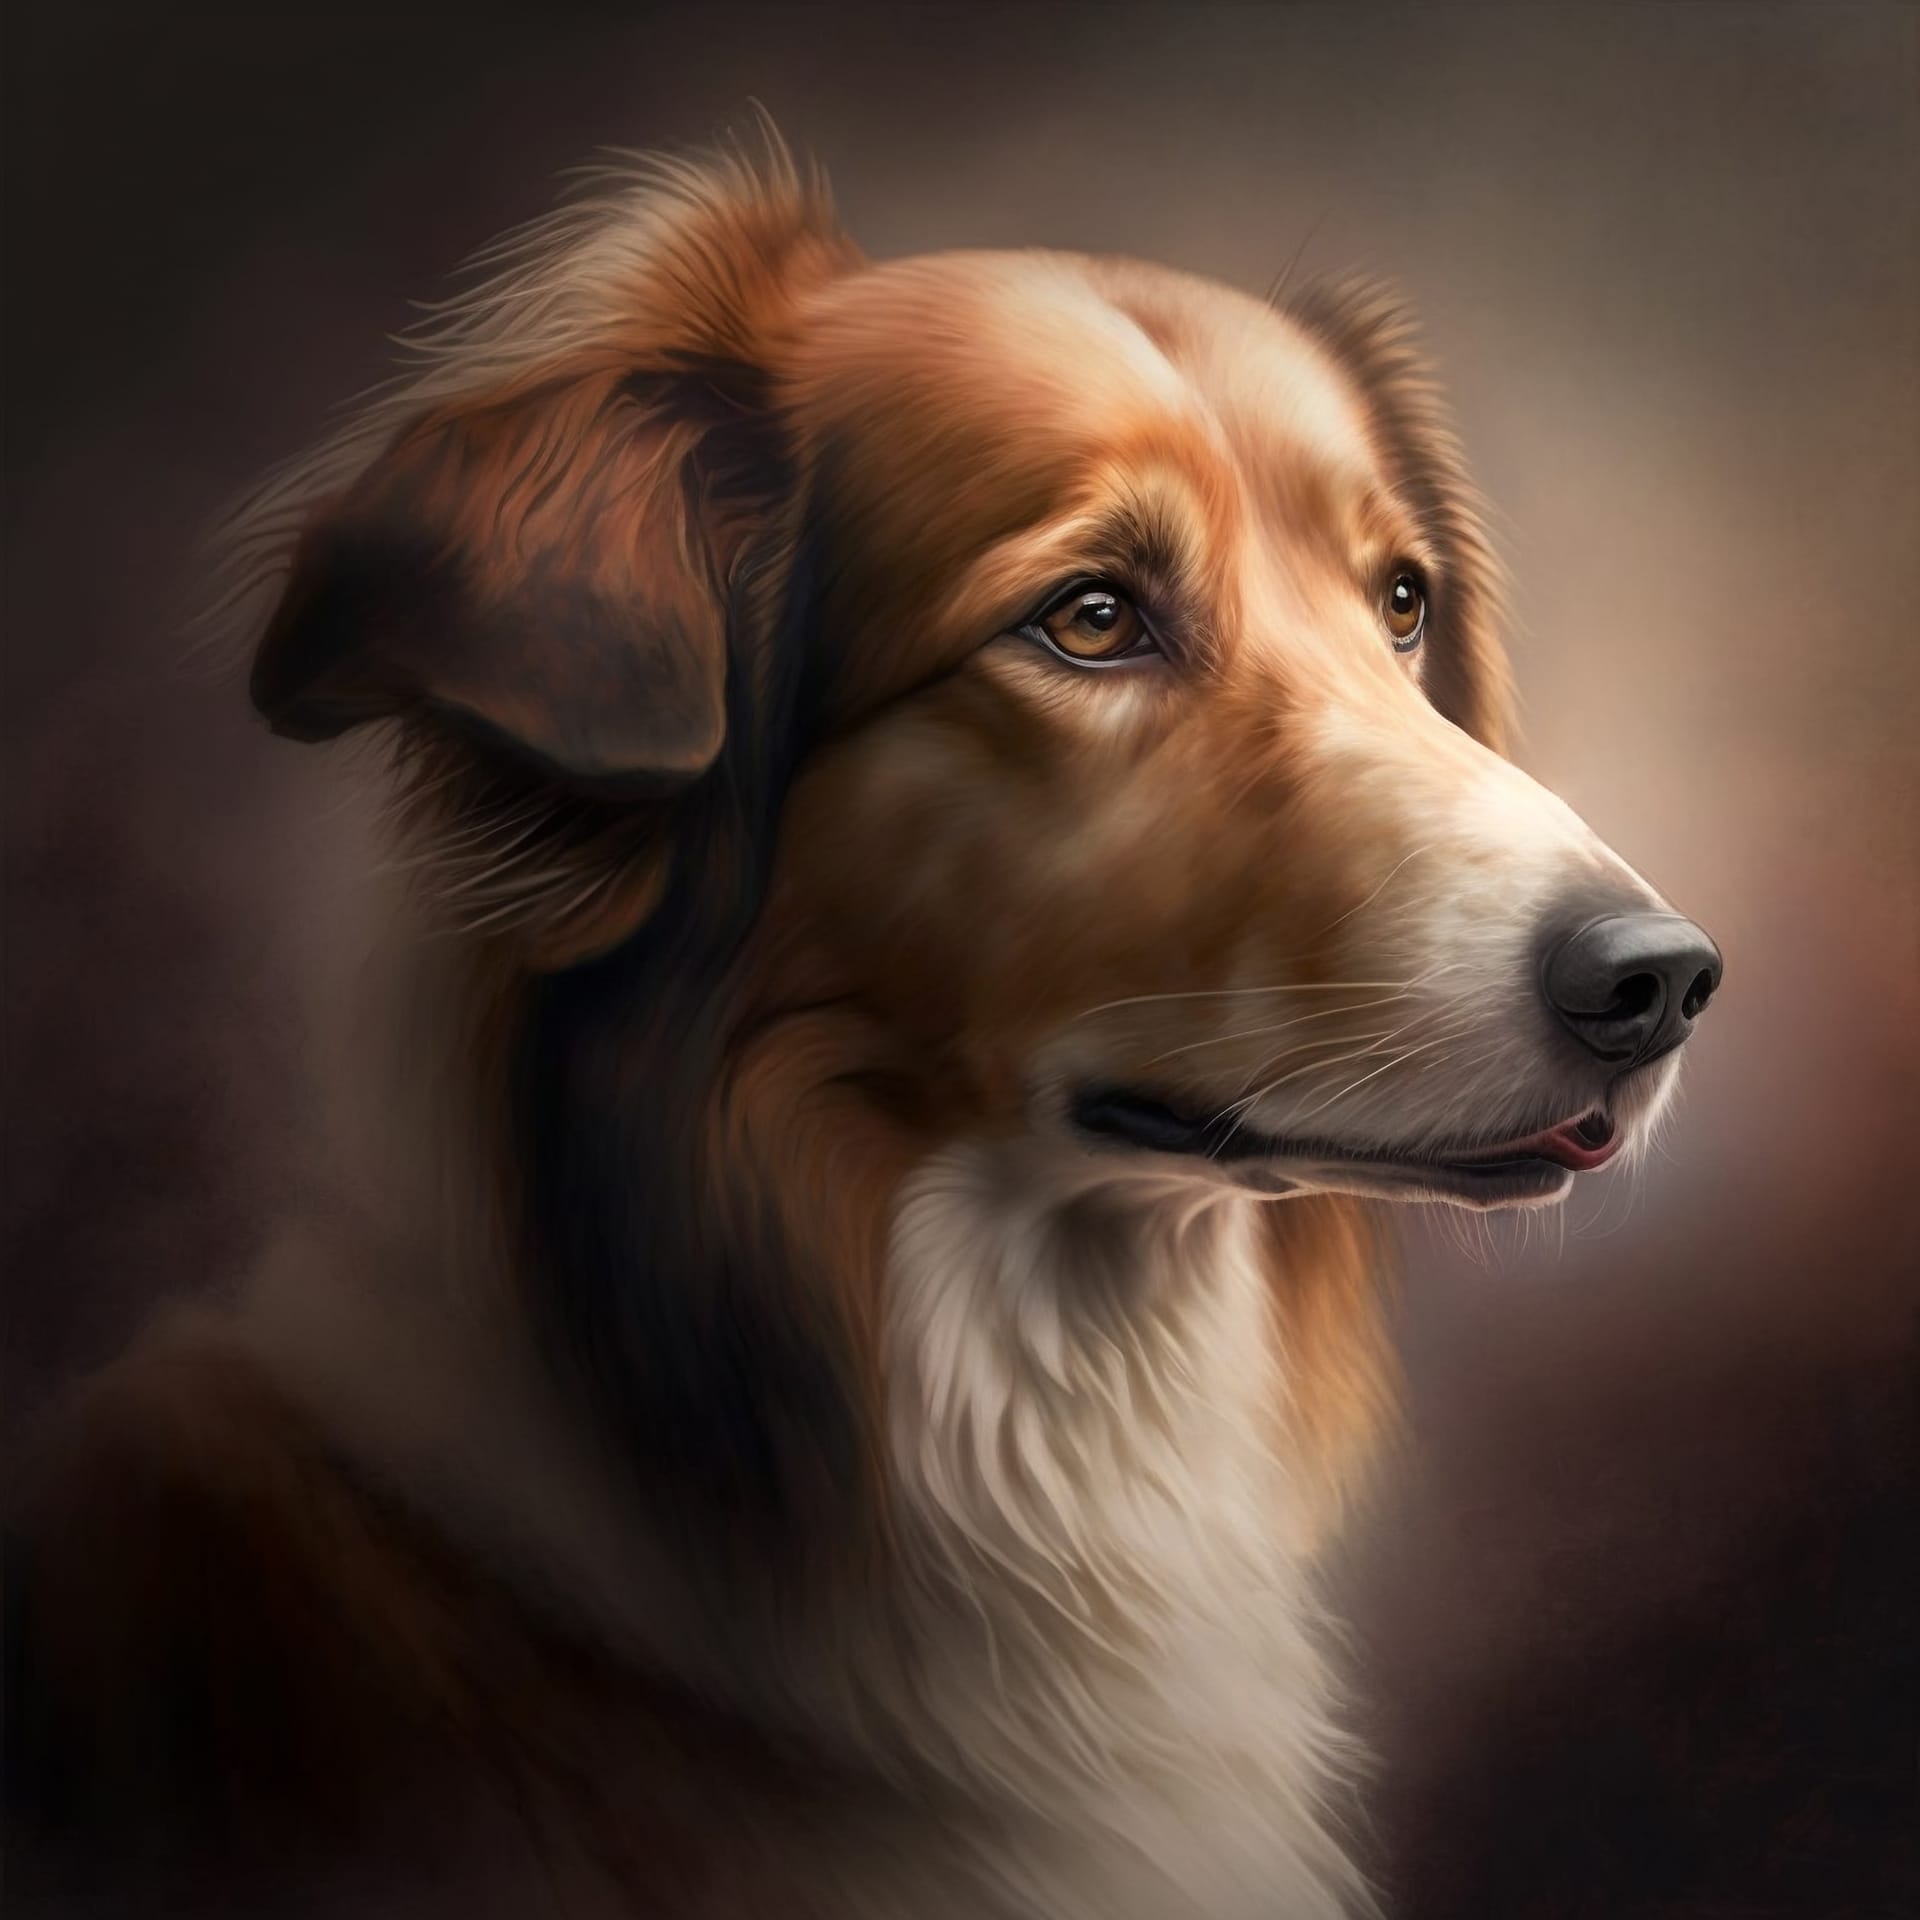 Dog studio portrait creative digital painting bright image